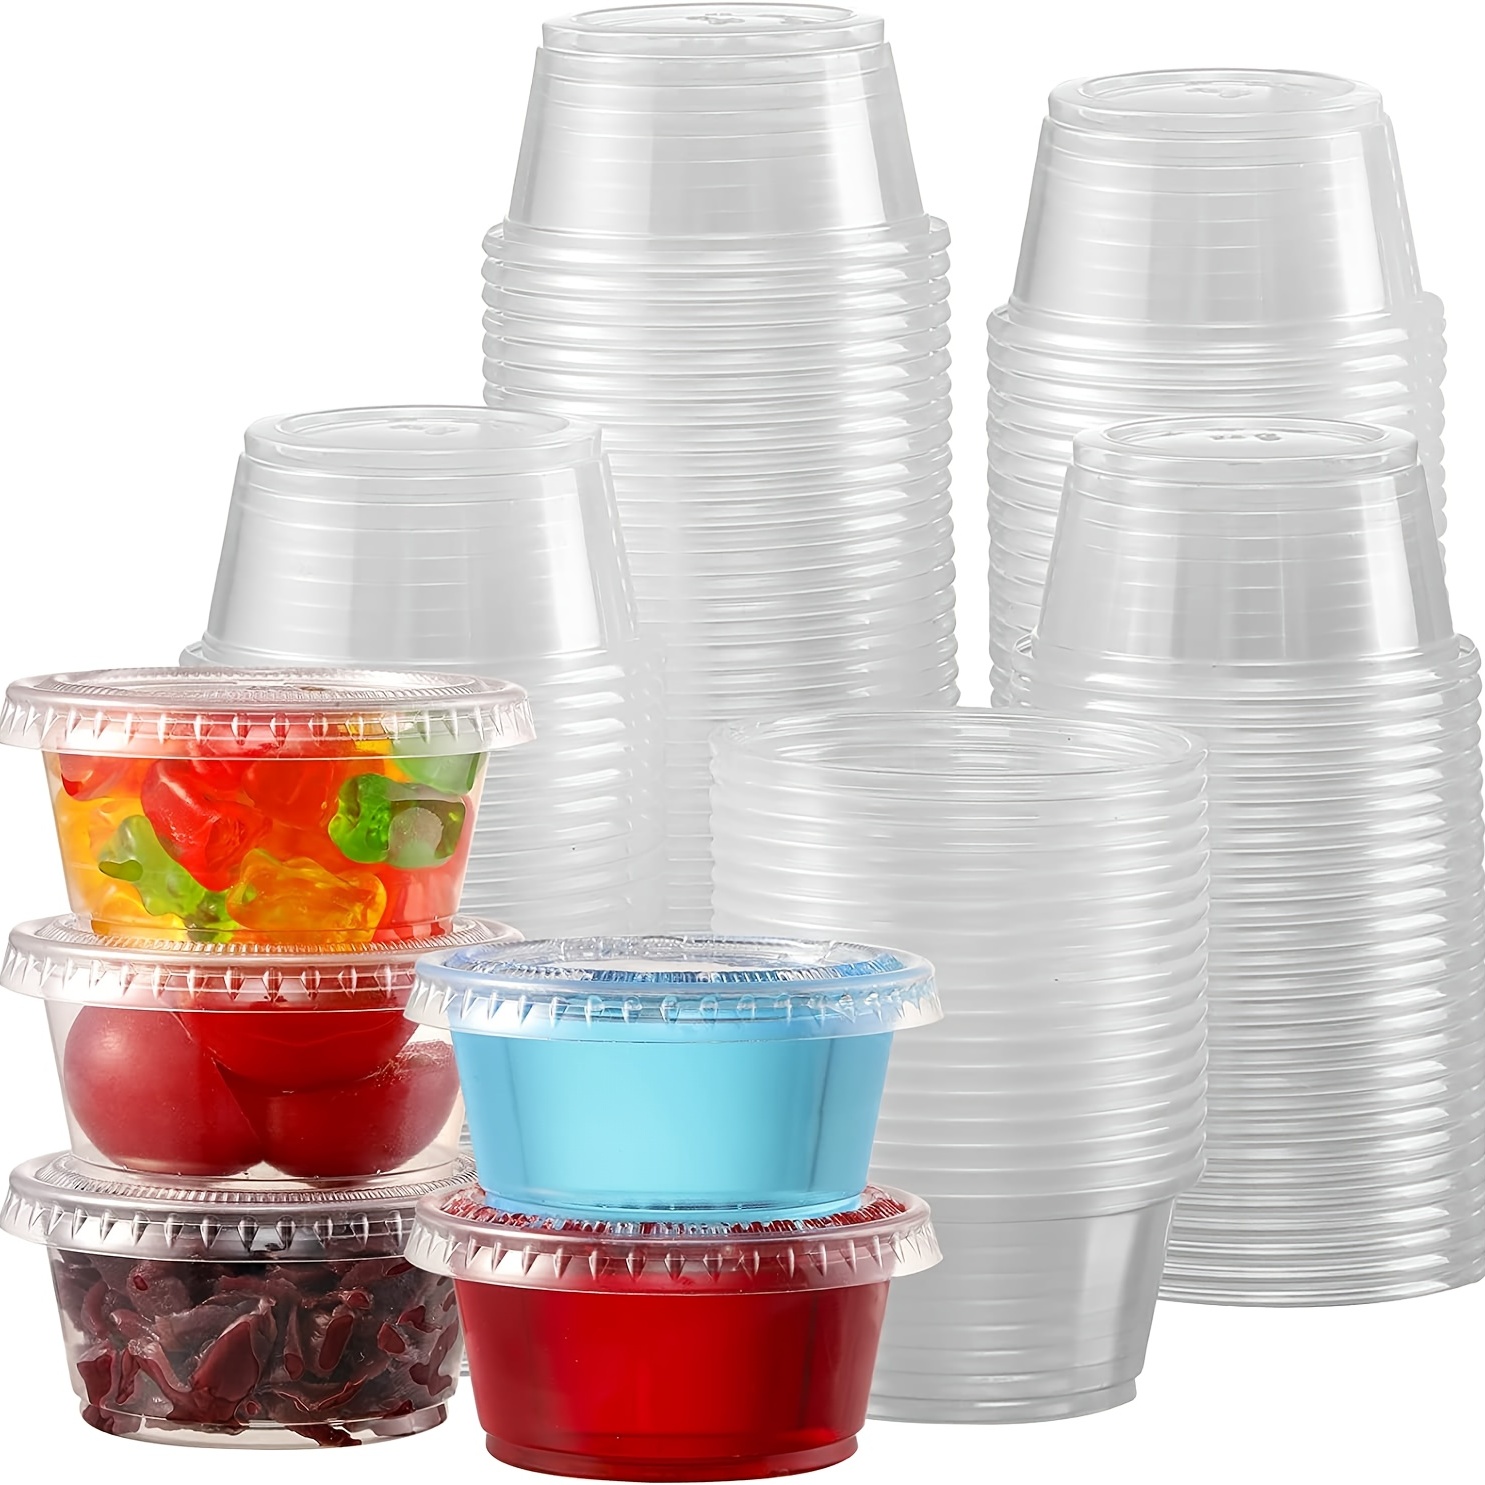 Galashield 50 Sets - 5.5 oz. Jello Shot Cups Condiment Containers